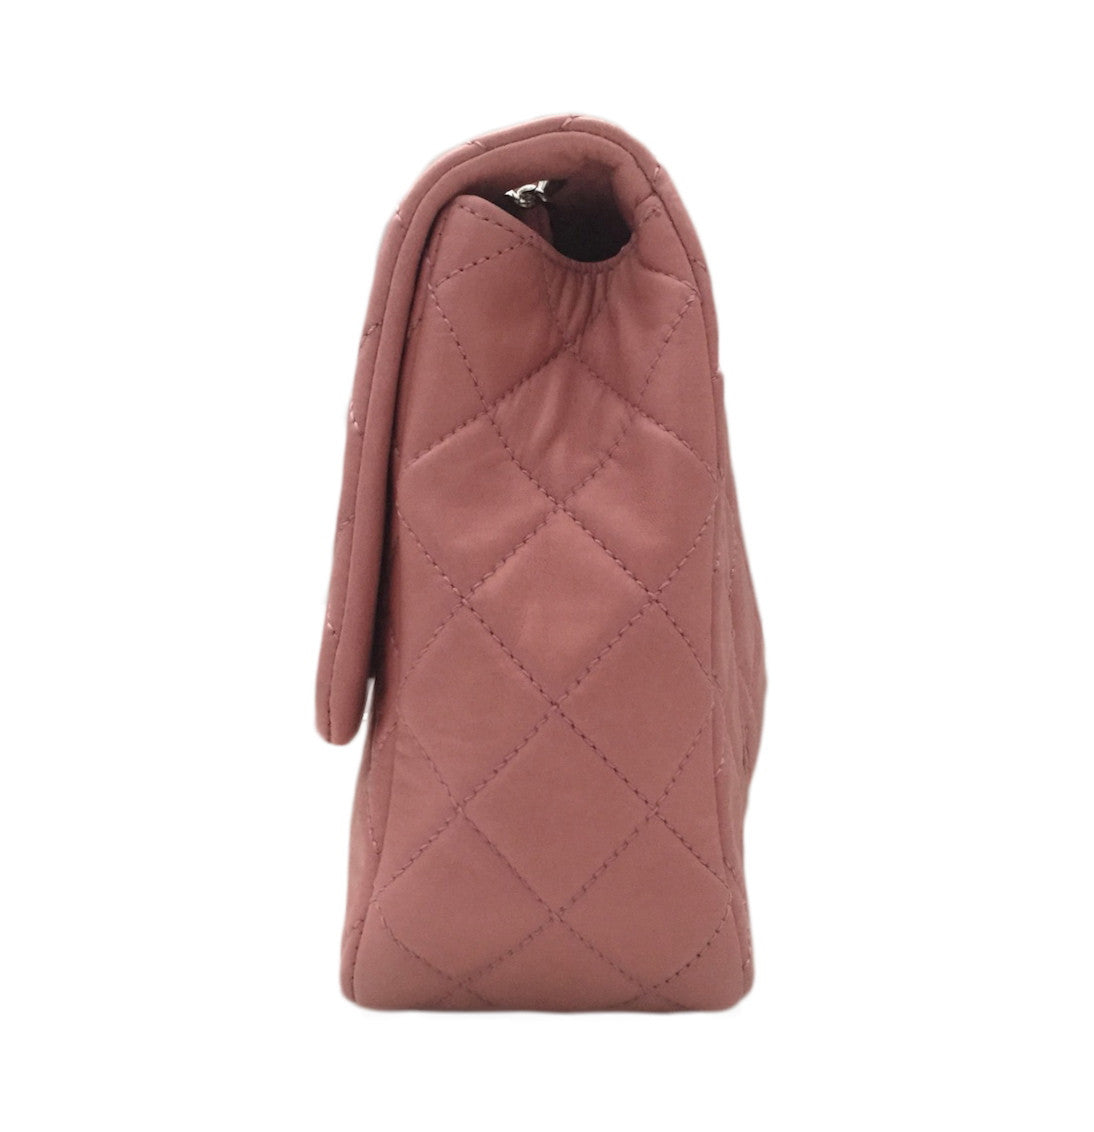 Authentic Chanel Pink Lambskin Jumbo – BRAND NEW IN BOX